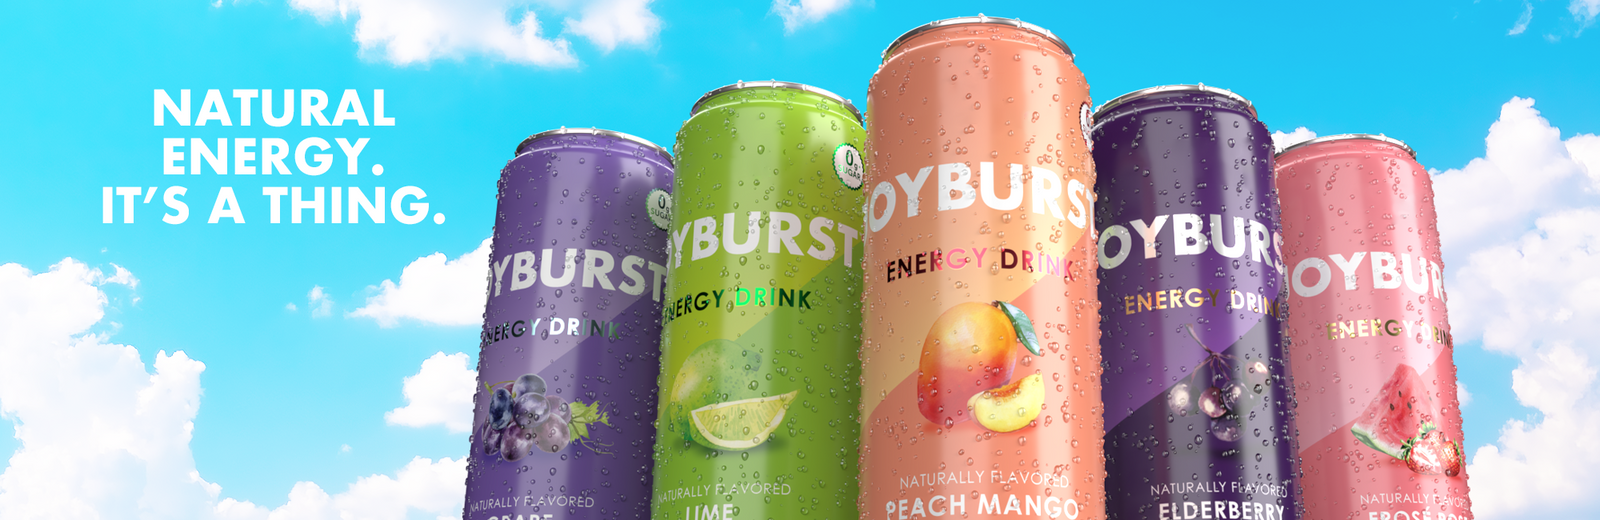 Original Energy Drink Flavors - JOYBURST